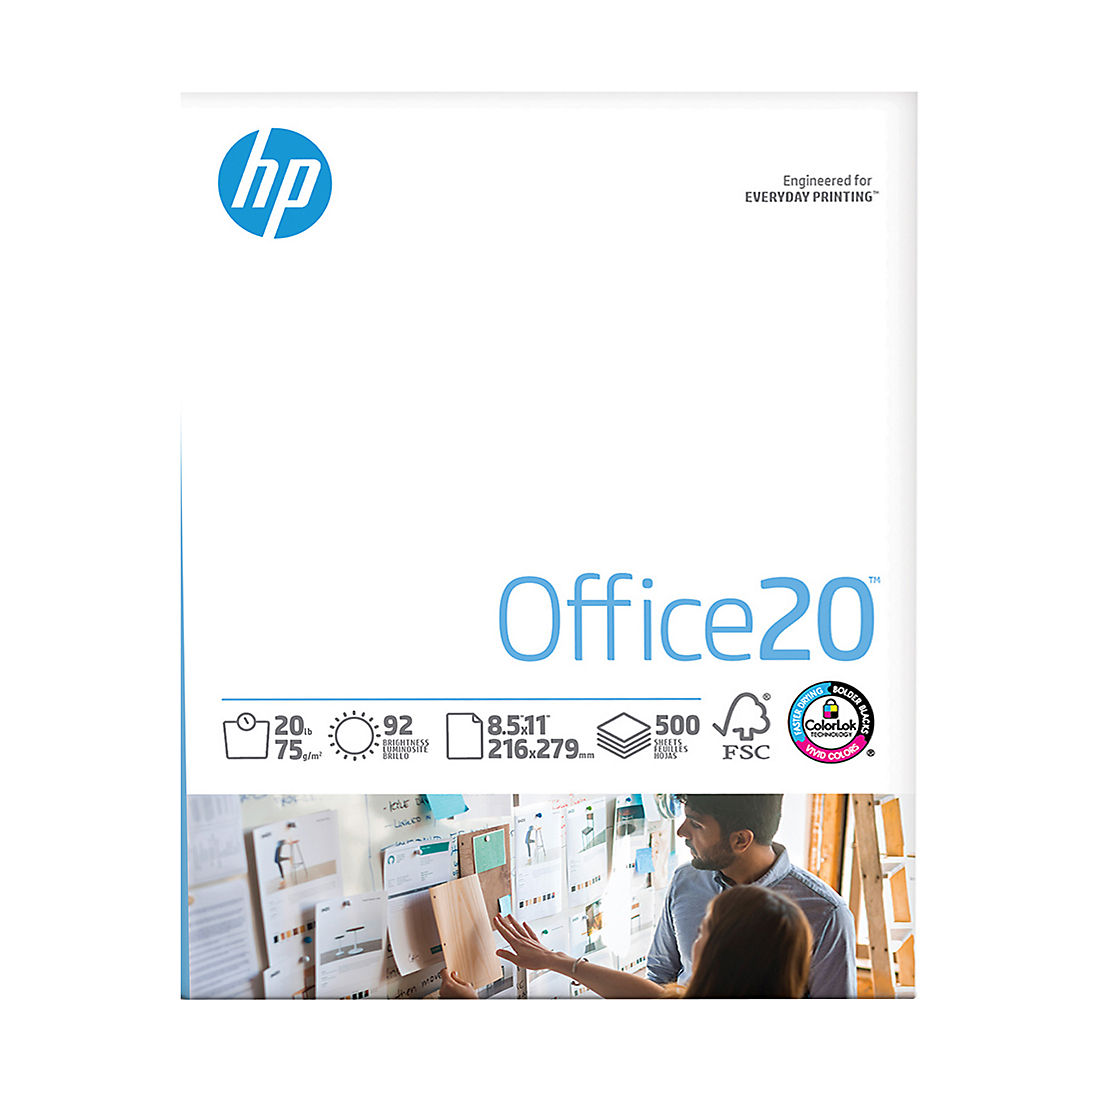 HP White Office Copy Paper, 92 Brightness, 20 lbs.